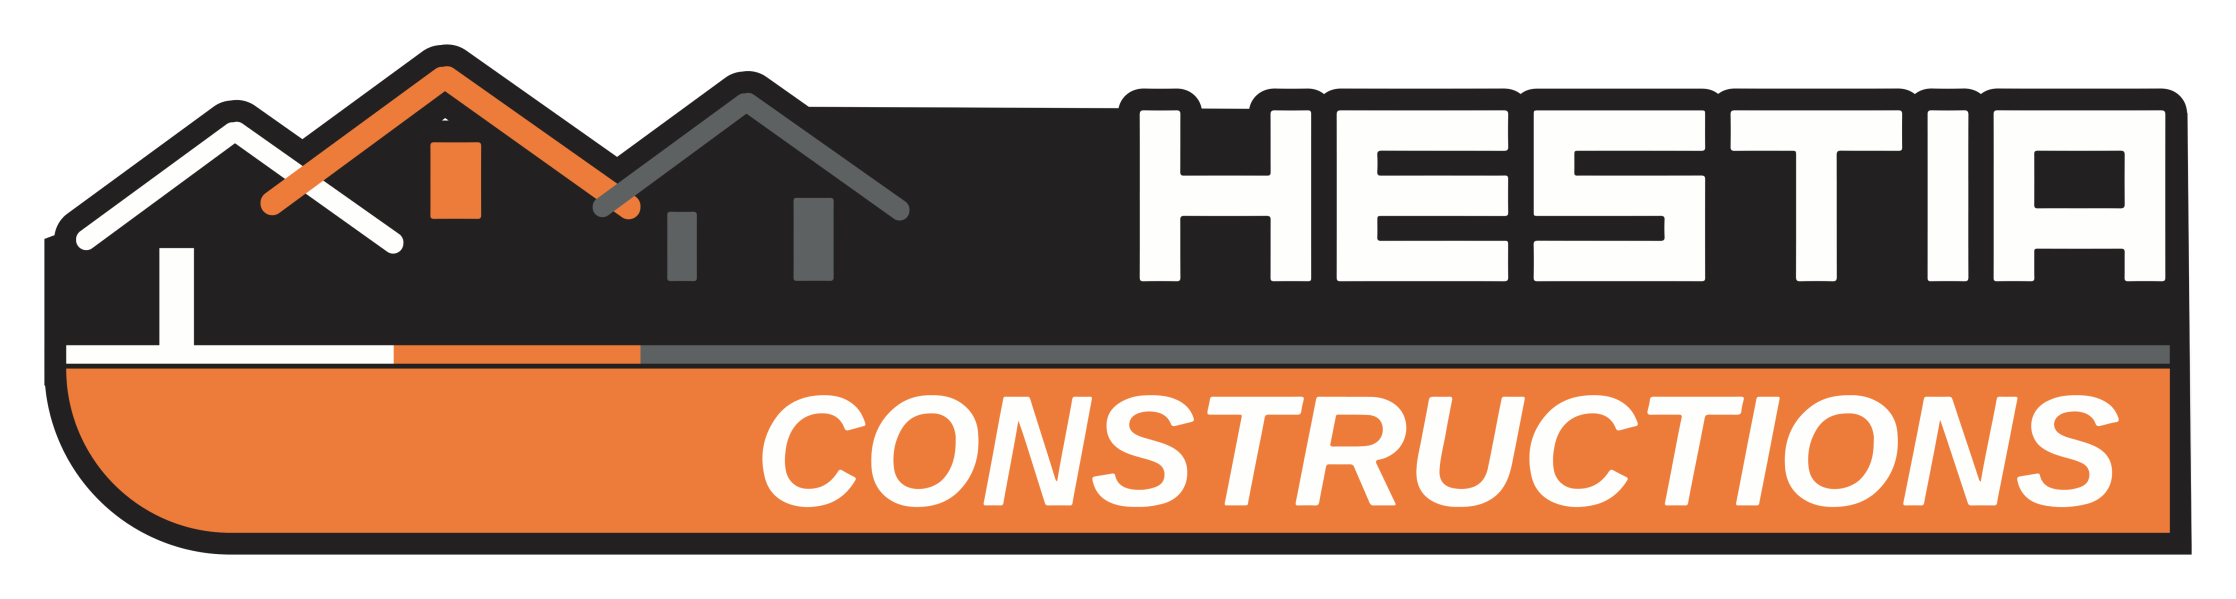 HESTIA CONSTRUCTION - Construction maison neuve